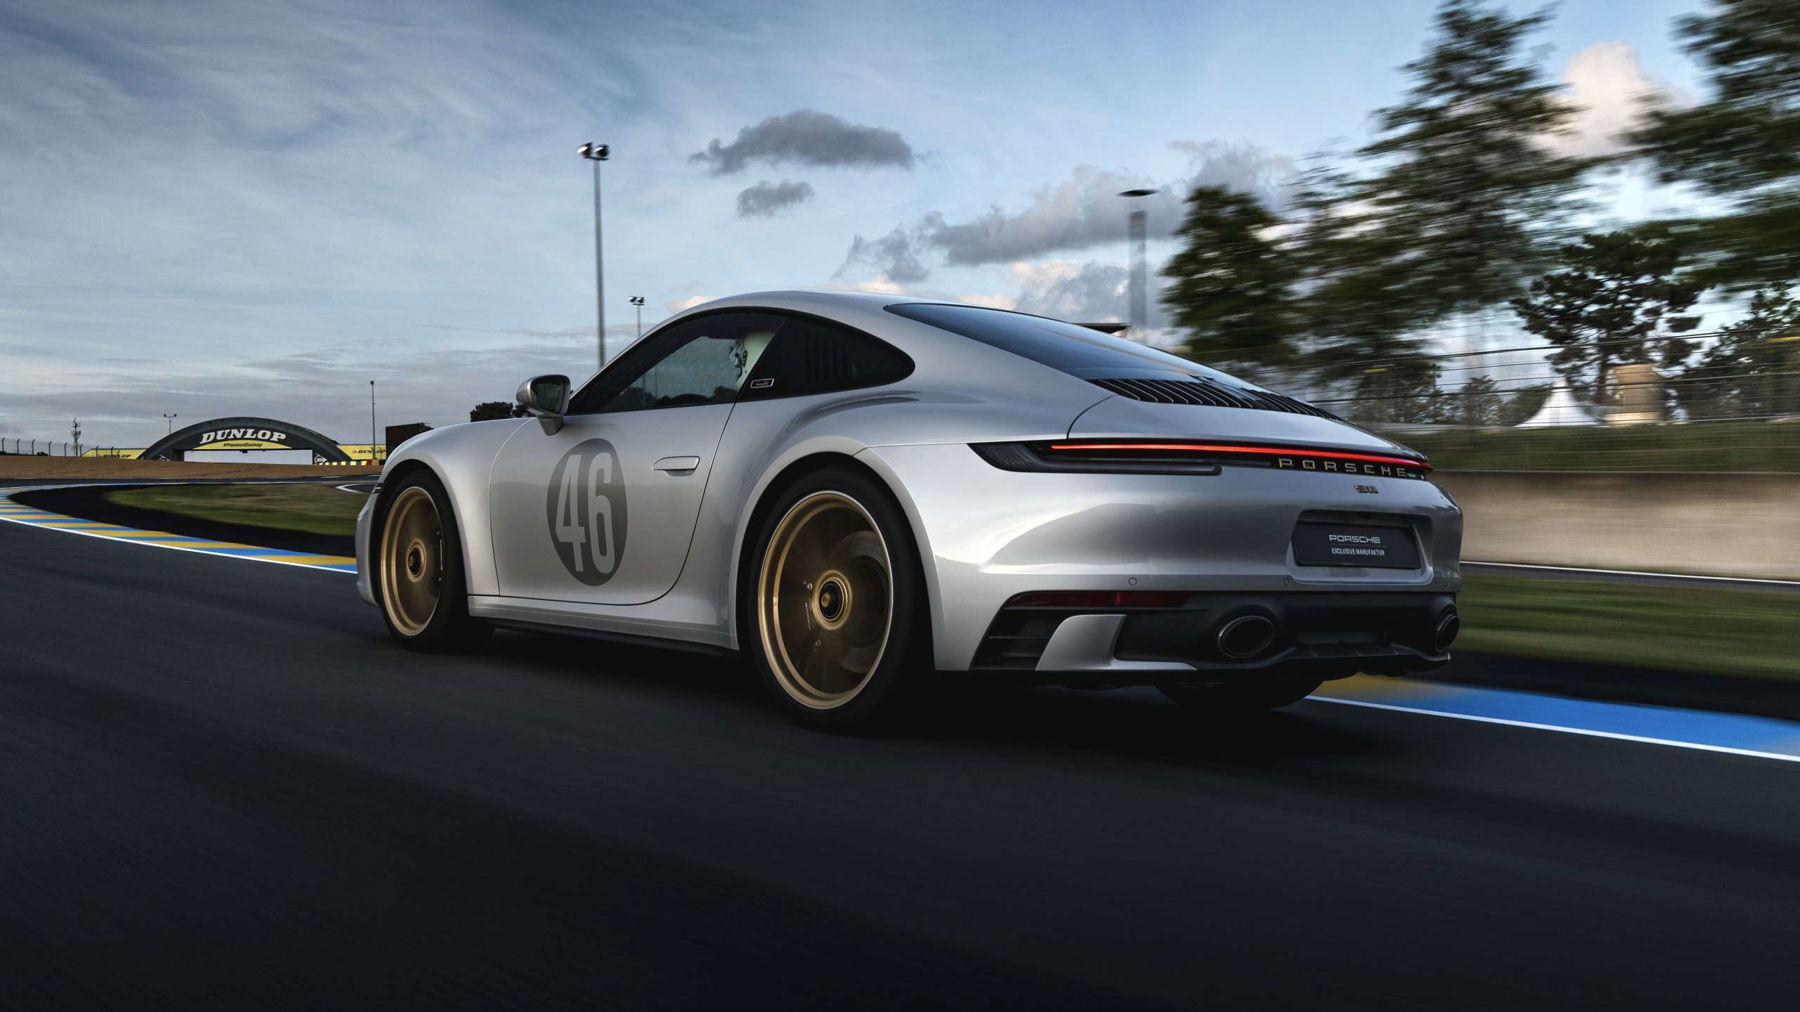 Porsche 911 Carrera GTS Le Mans Centenaire Edition – Special 911 for France